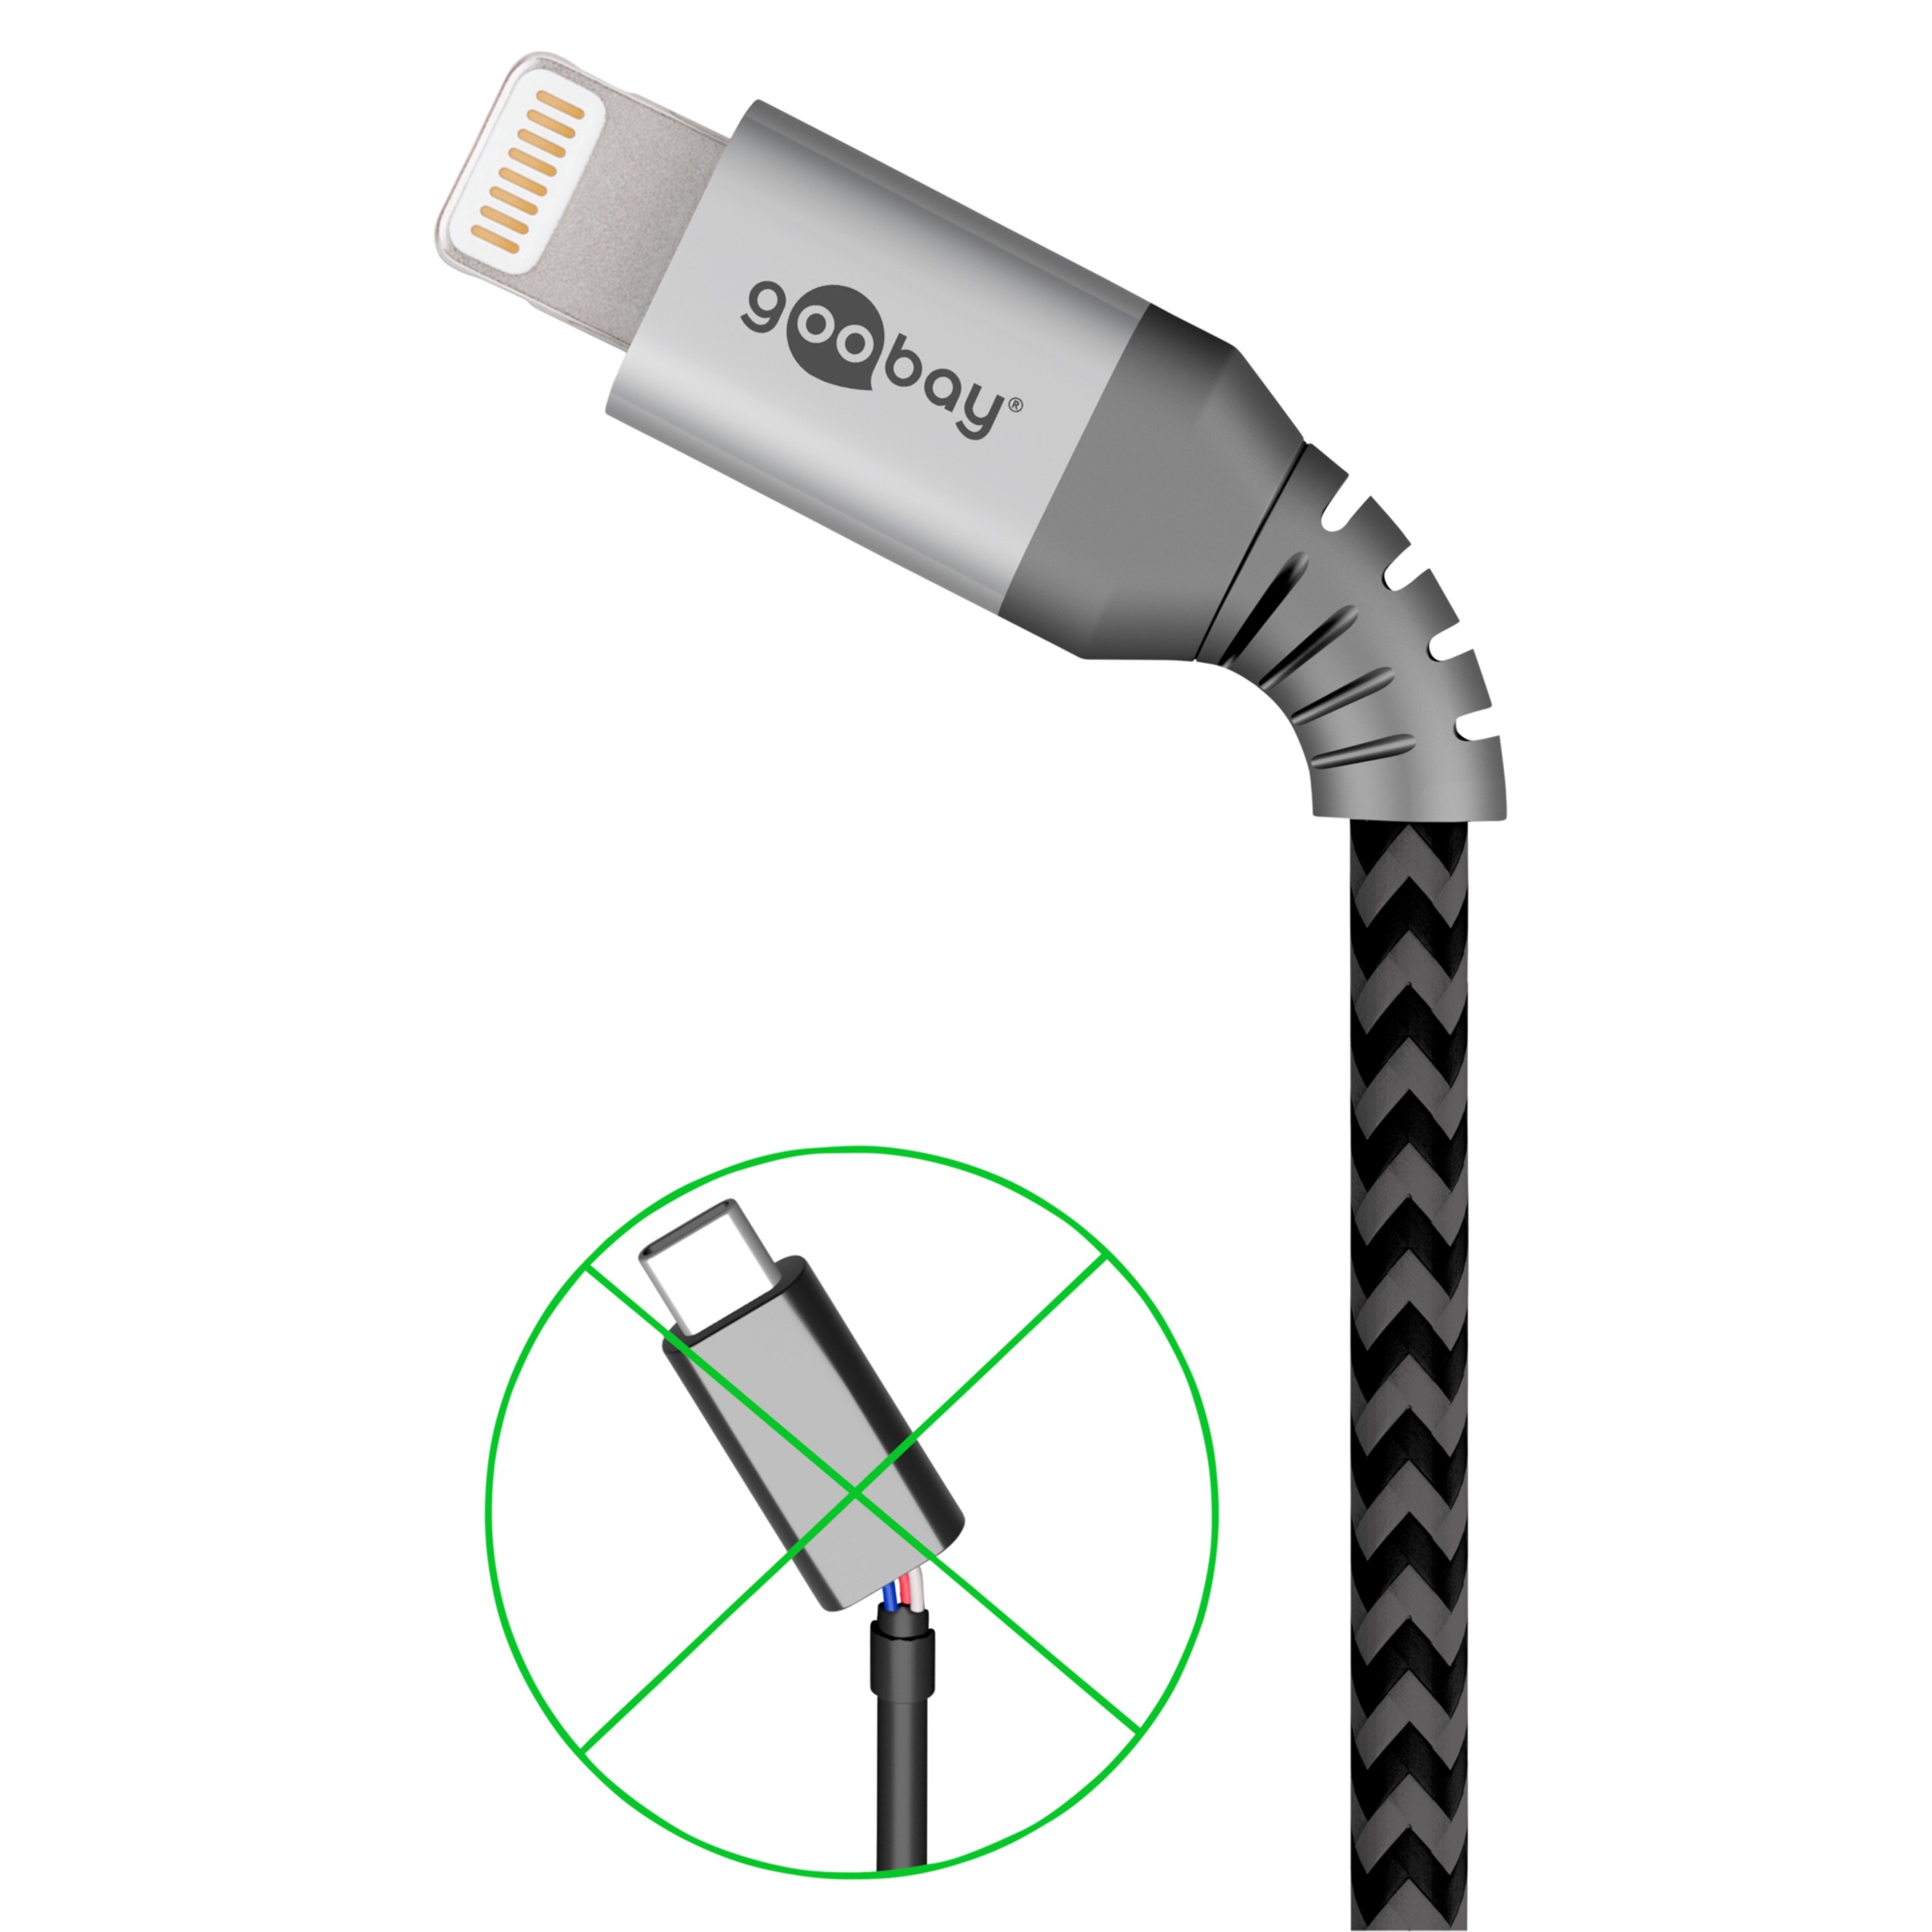 WENTRONIC Lightning auf USB-A Kabel, extra-robust, Apple MFi zertifiziert (z.B. für Apple iPhone, iPad, Geräte)